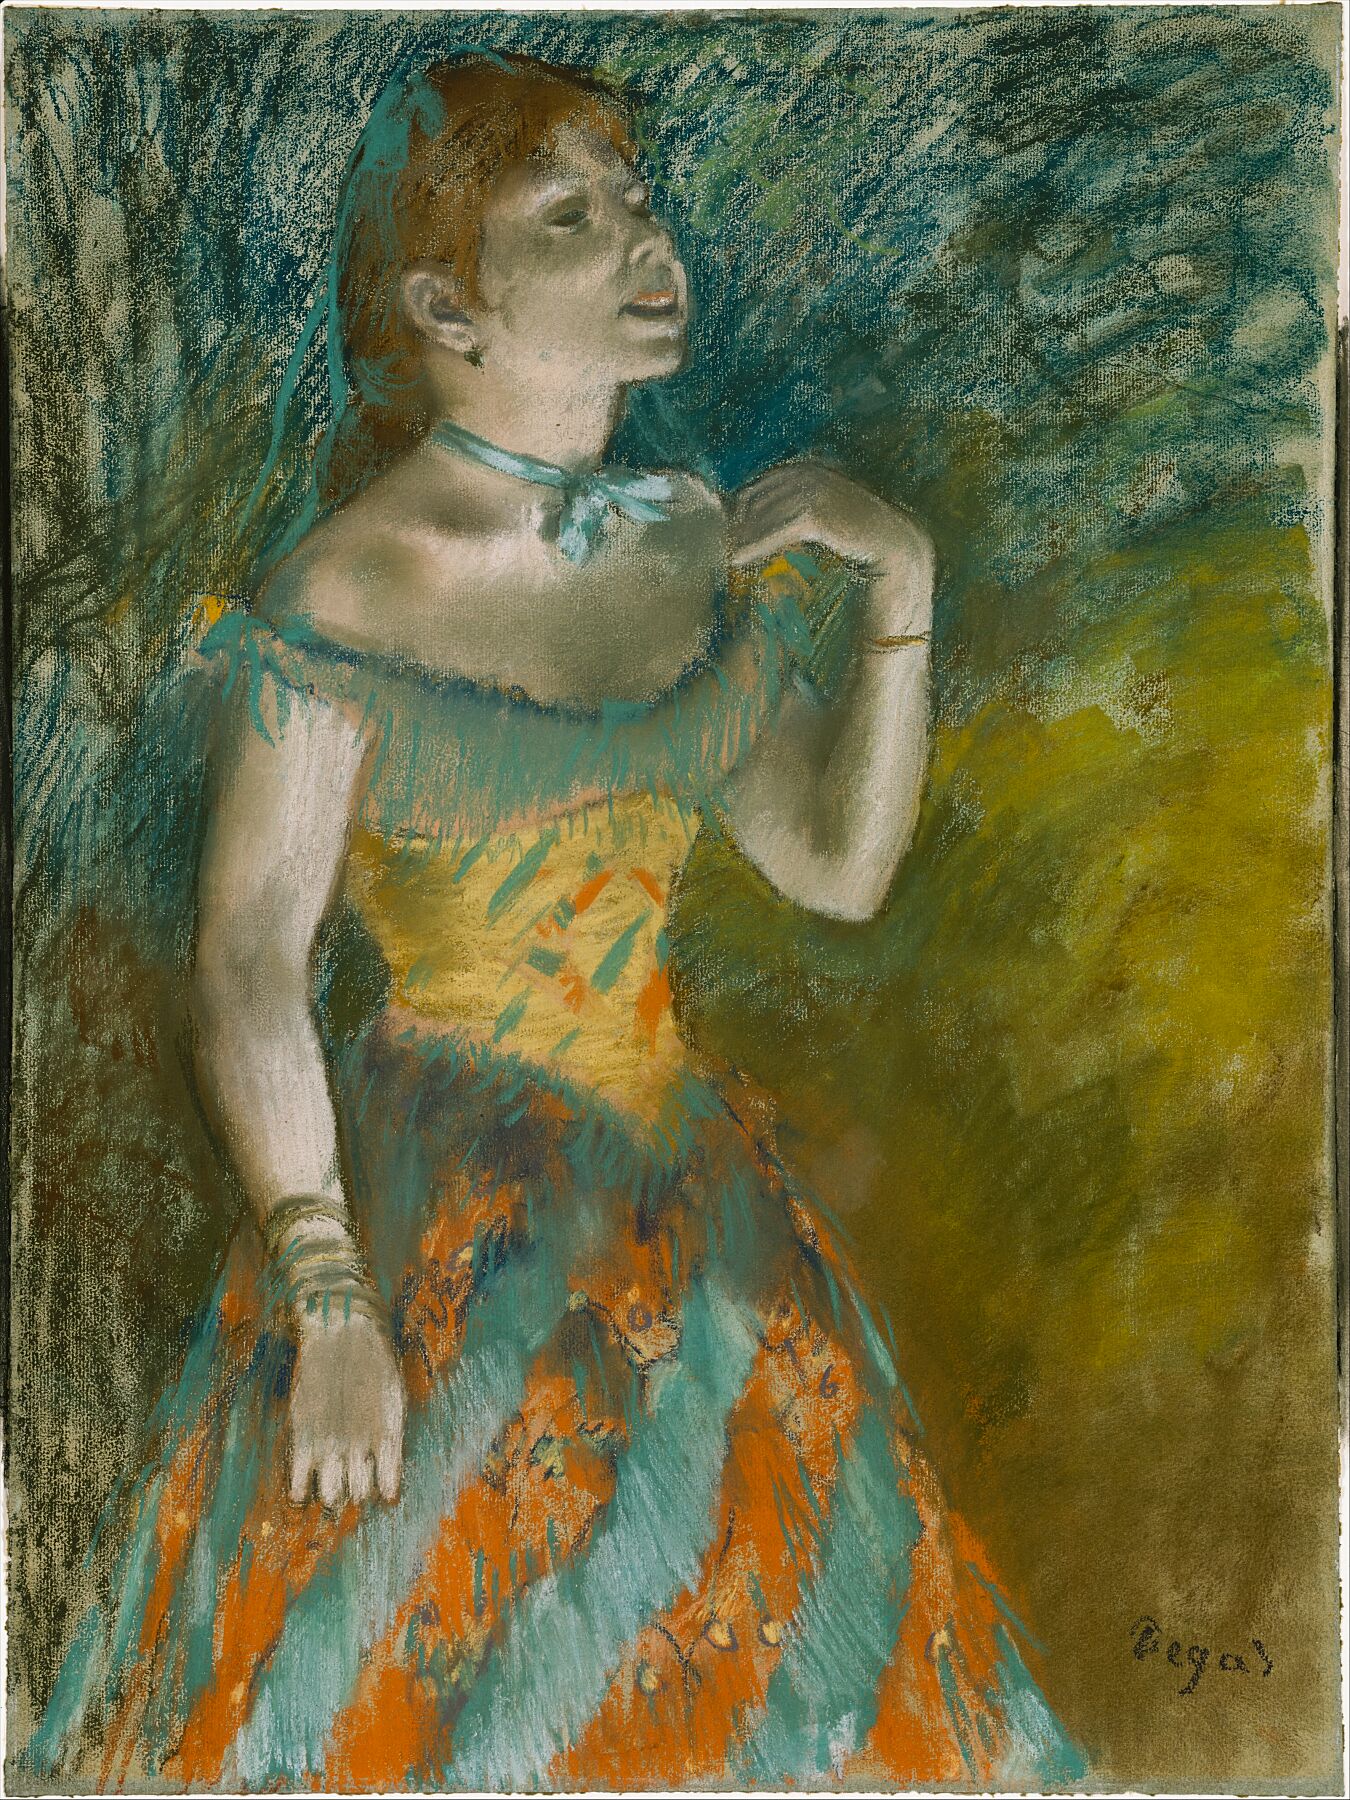 The Singer in Green by Edgar Degas - ca. 1884